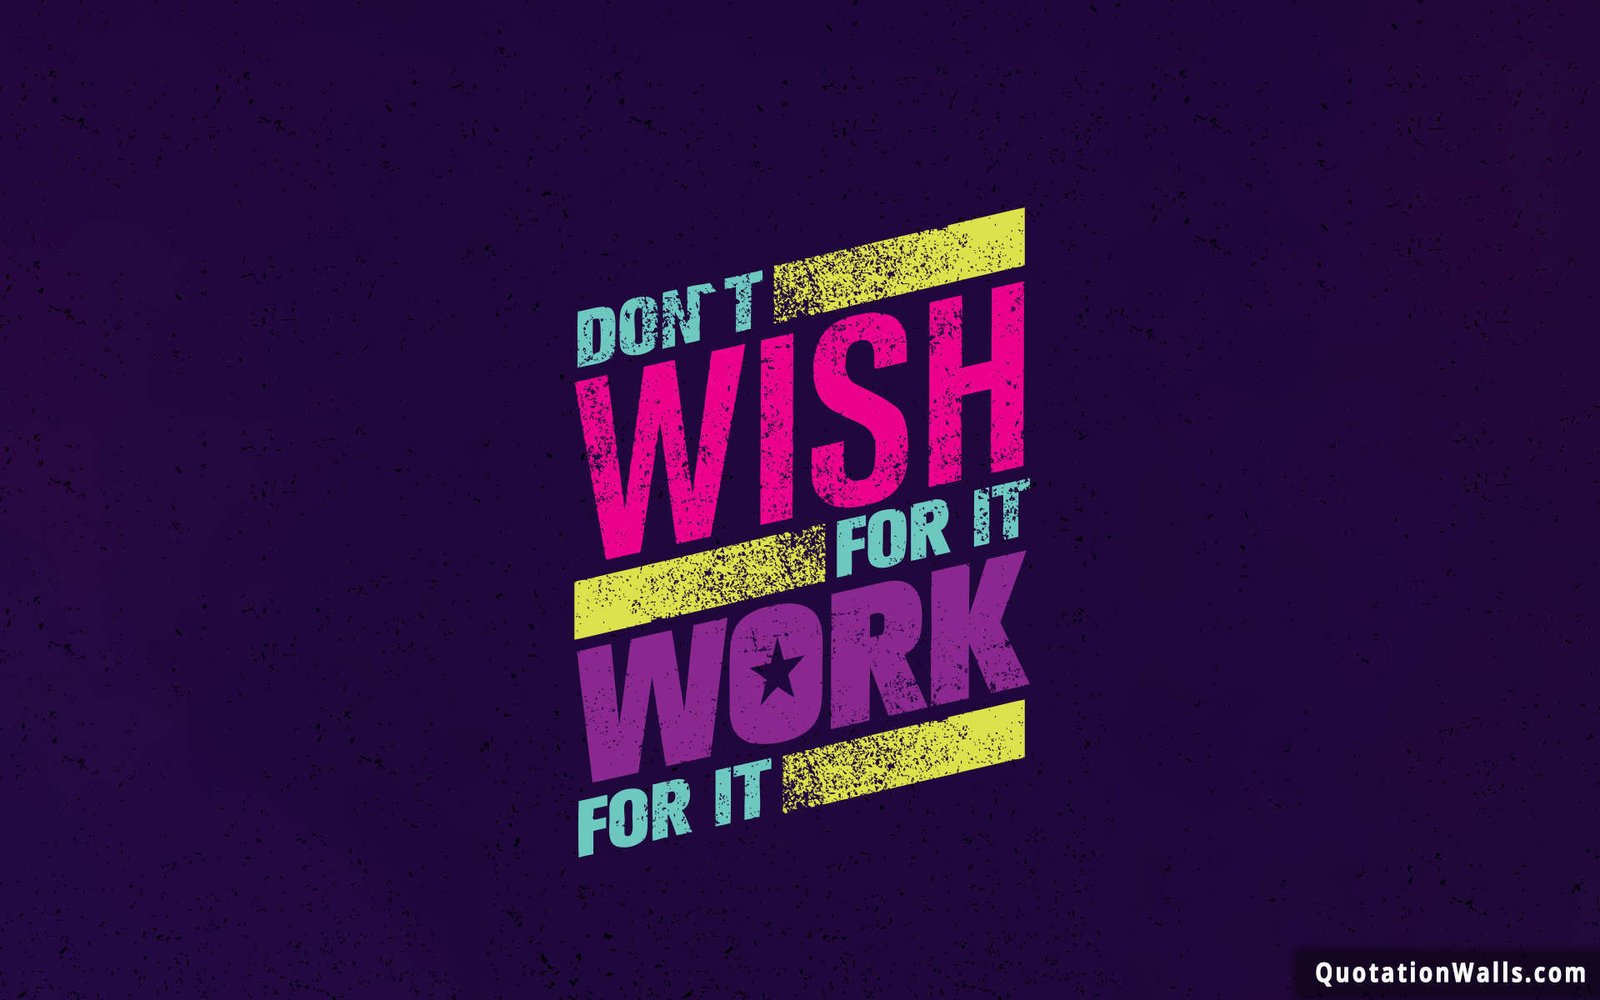 Work For It Motivational Wallpaper for Desktop - QuotationWalls